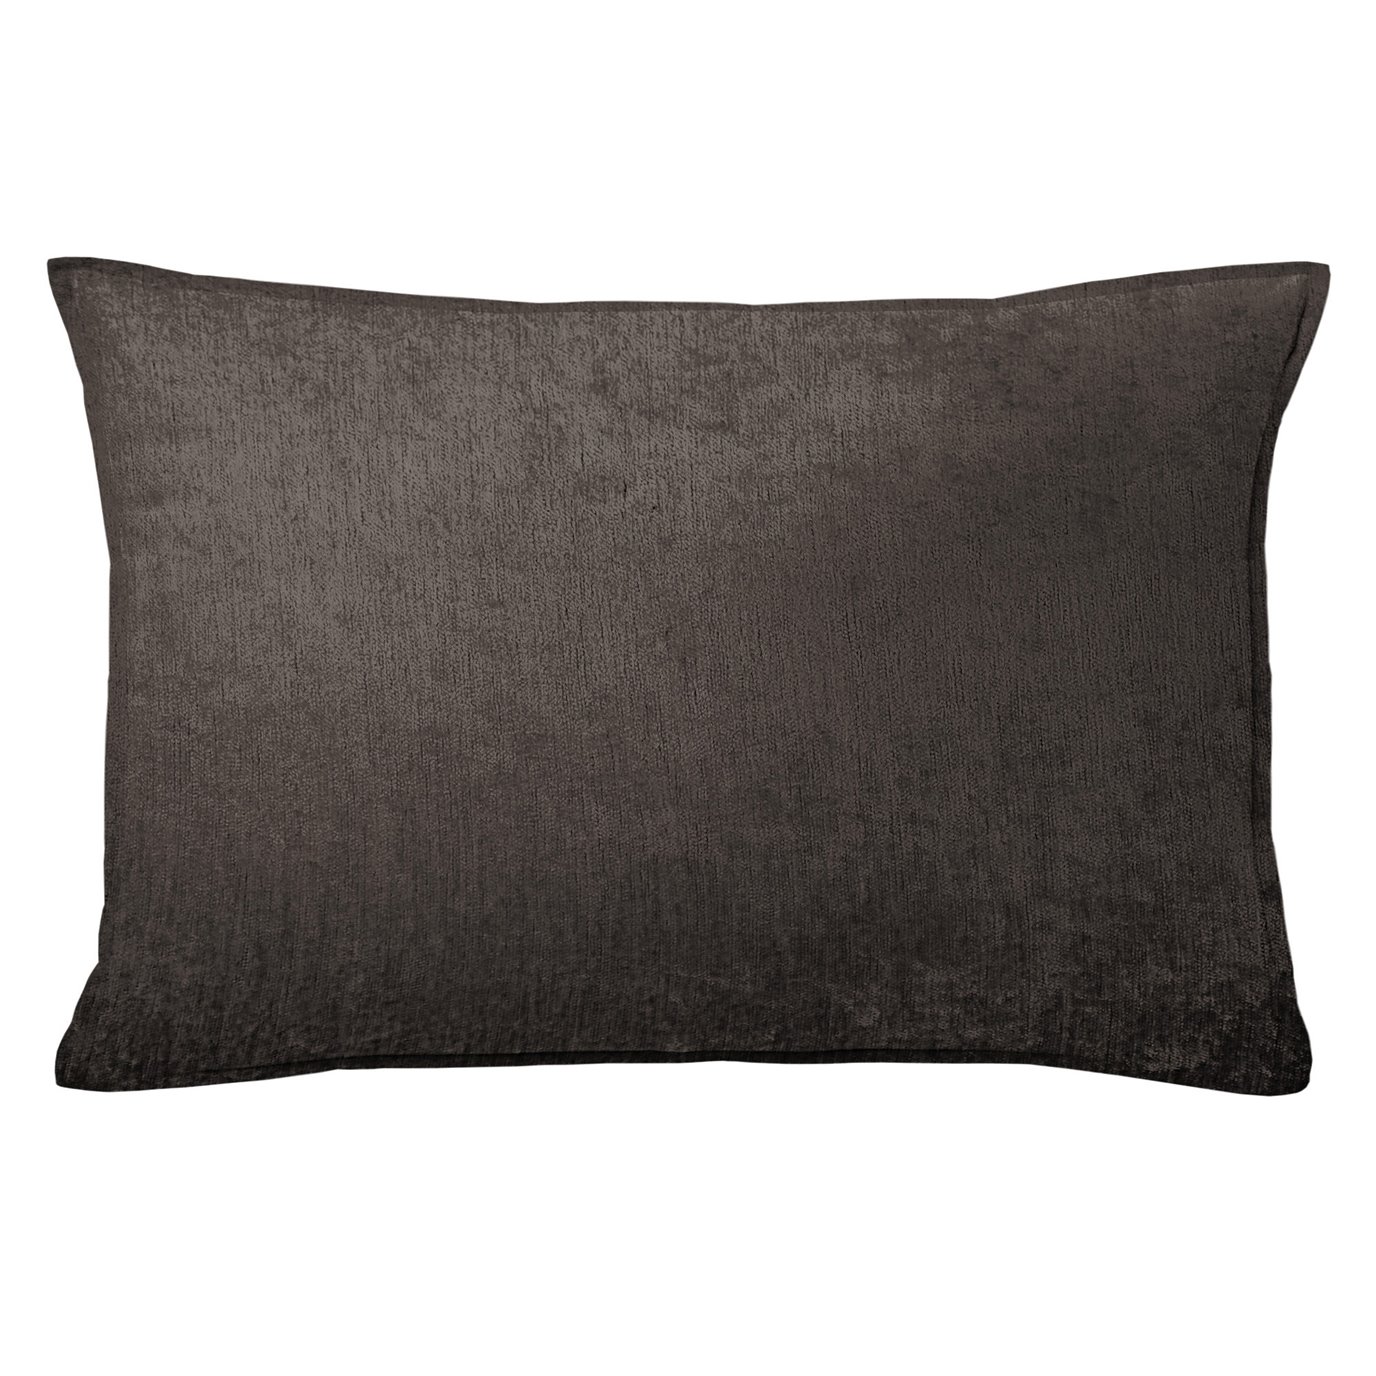 Juno Velvet Chocolate Decorative Pillow - Size 14"x20" Rectangle